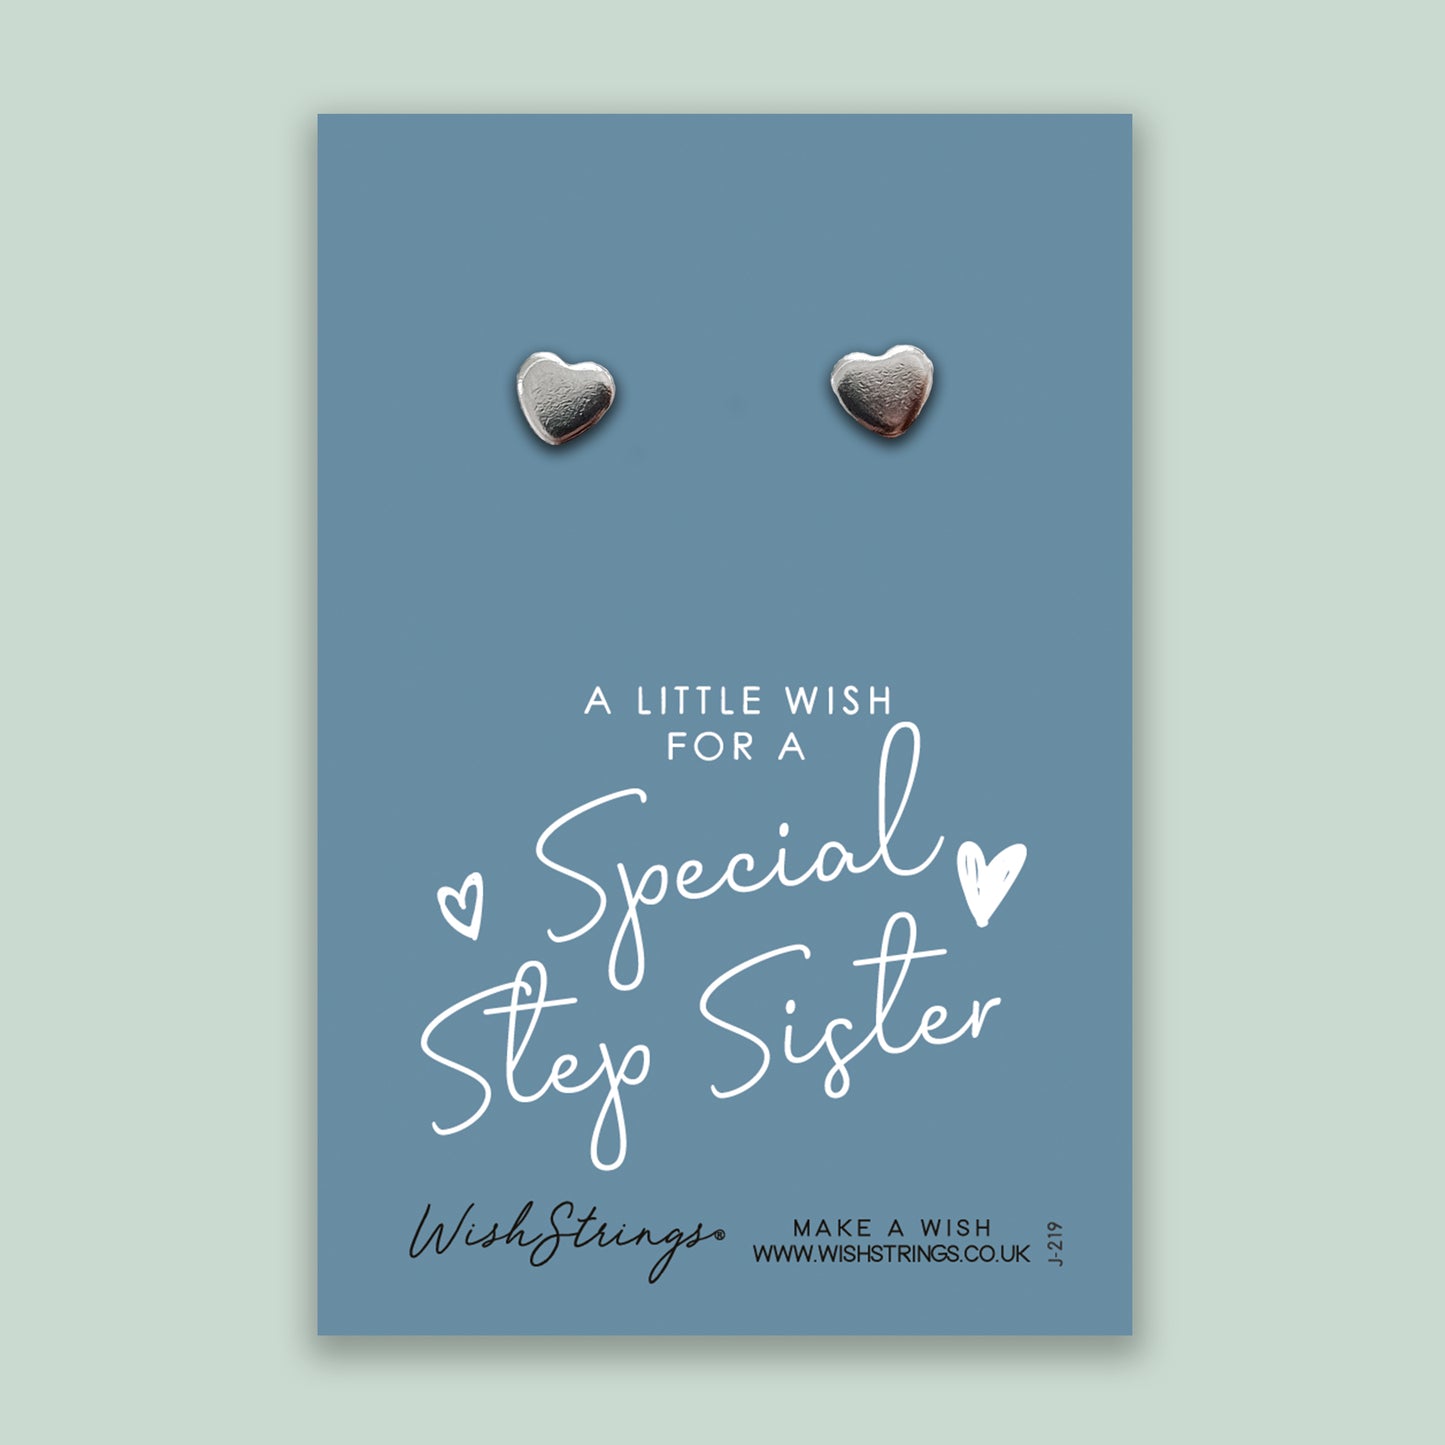 Step Sister - Silver Heart Stud Earrings | 304 Stainless - Hypoallergenic